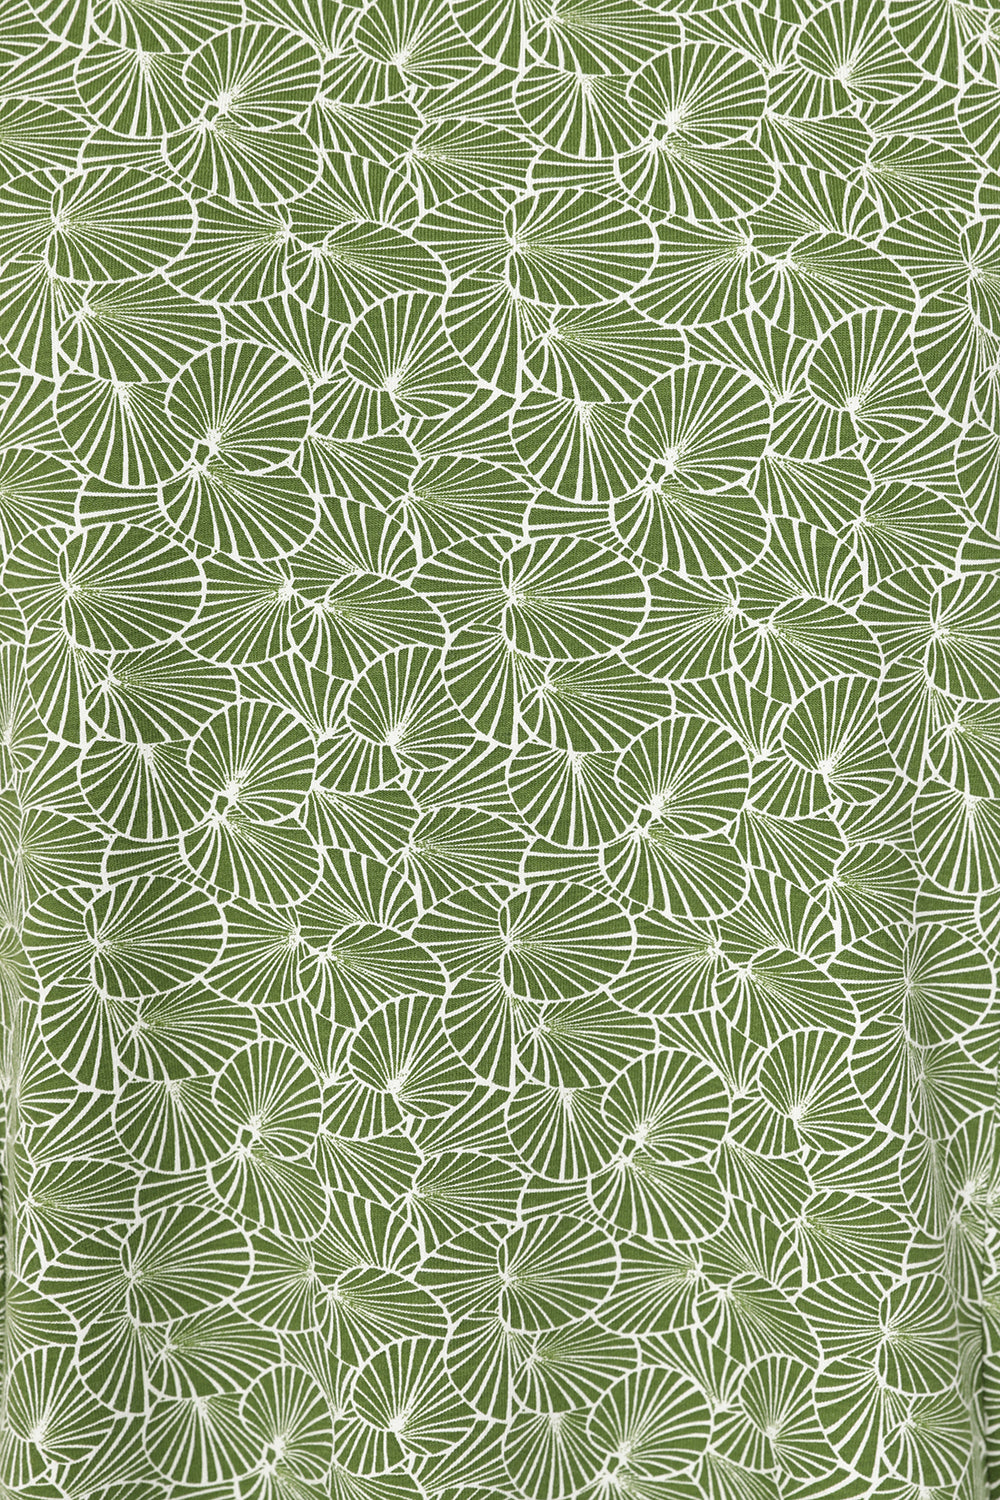 Francoise Tunic - Green Lily Pad Print  - GOTS Organic Cotton